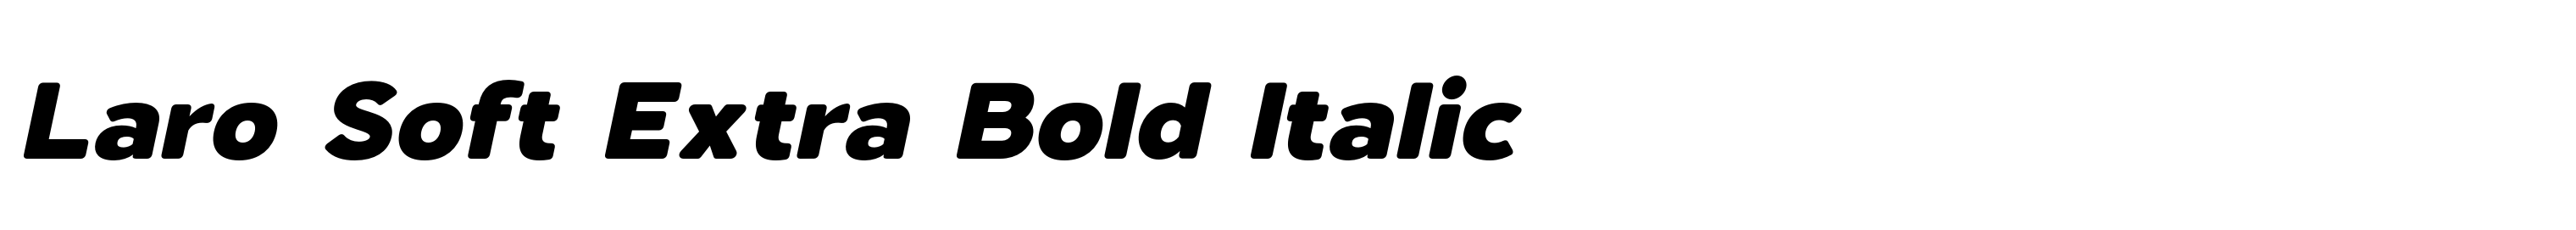 Laro Soft Extra Bold Italic